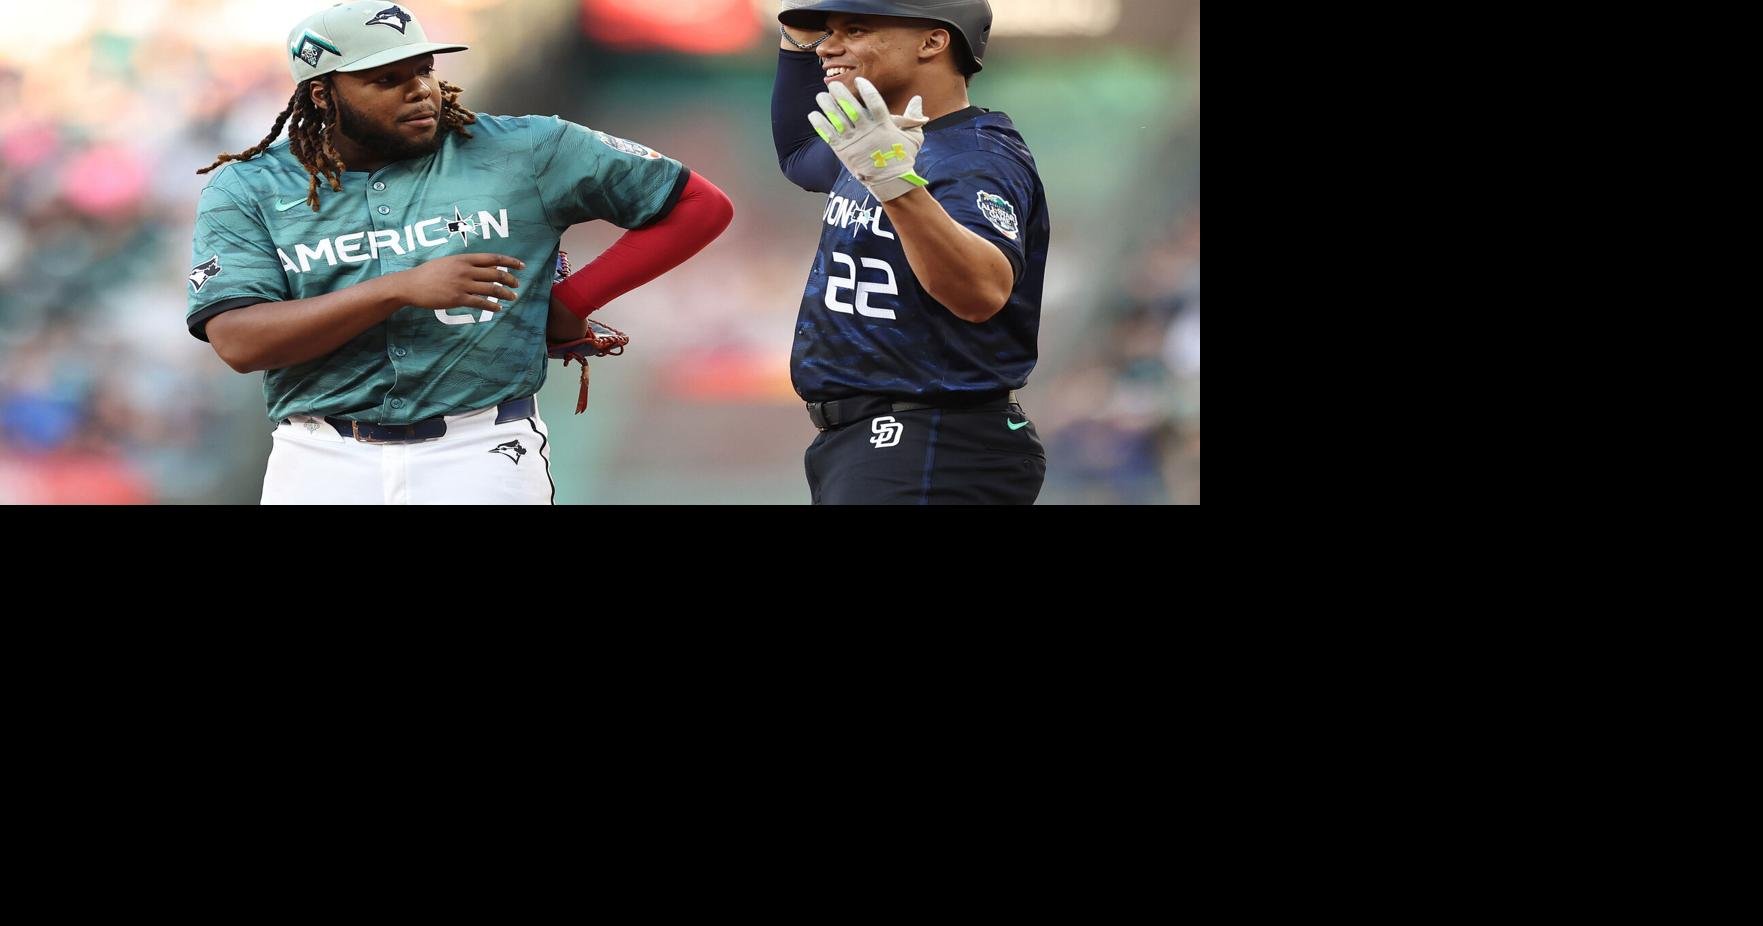 Vladimir Guerrero Jr American League 2023 MLB All Star Game Teal Jersey -   Worldwide Shipping